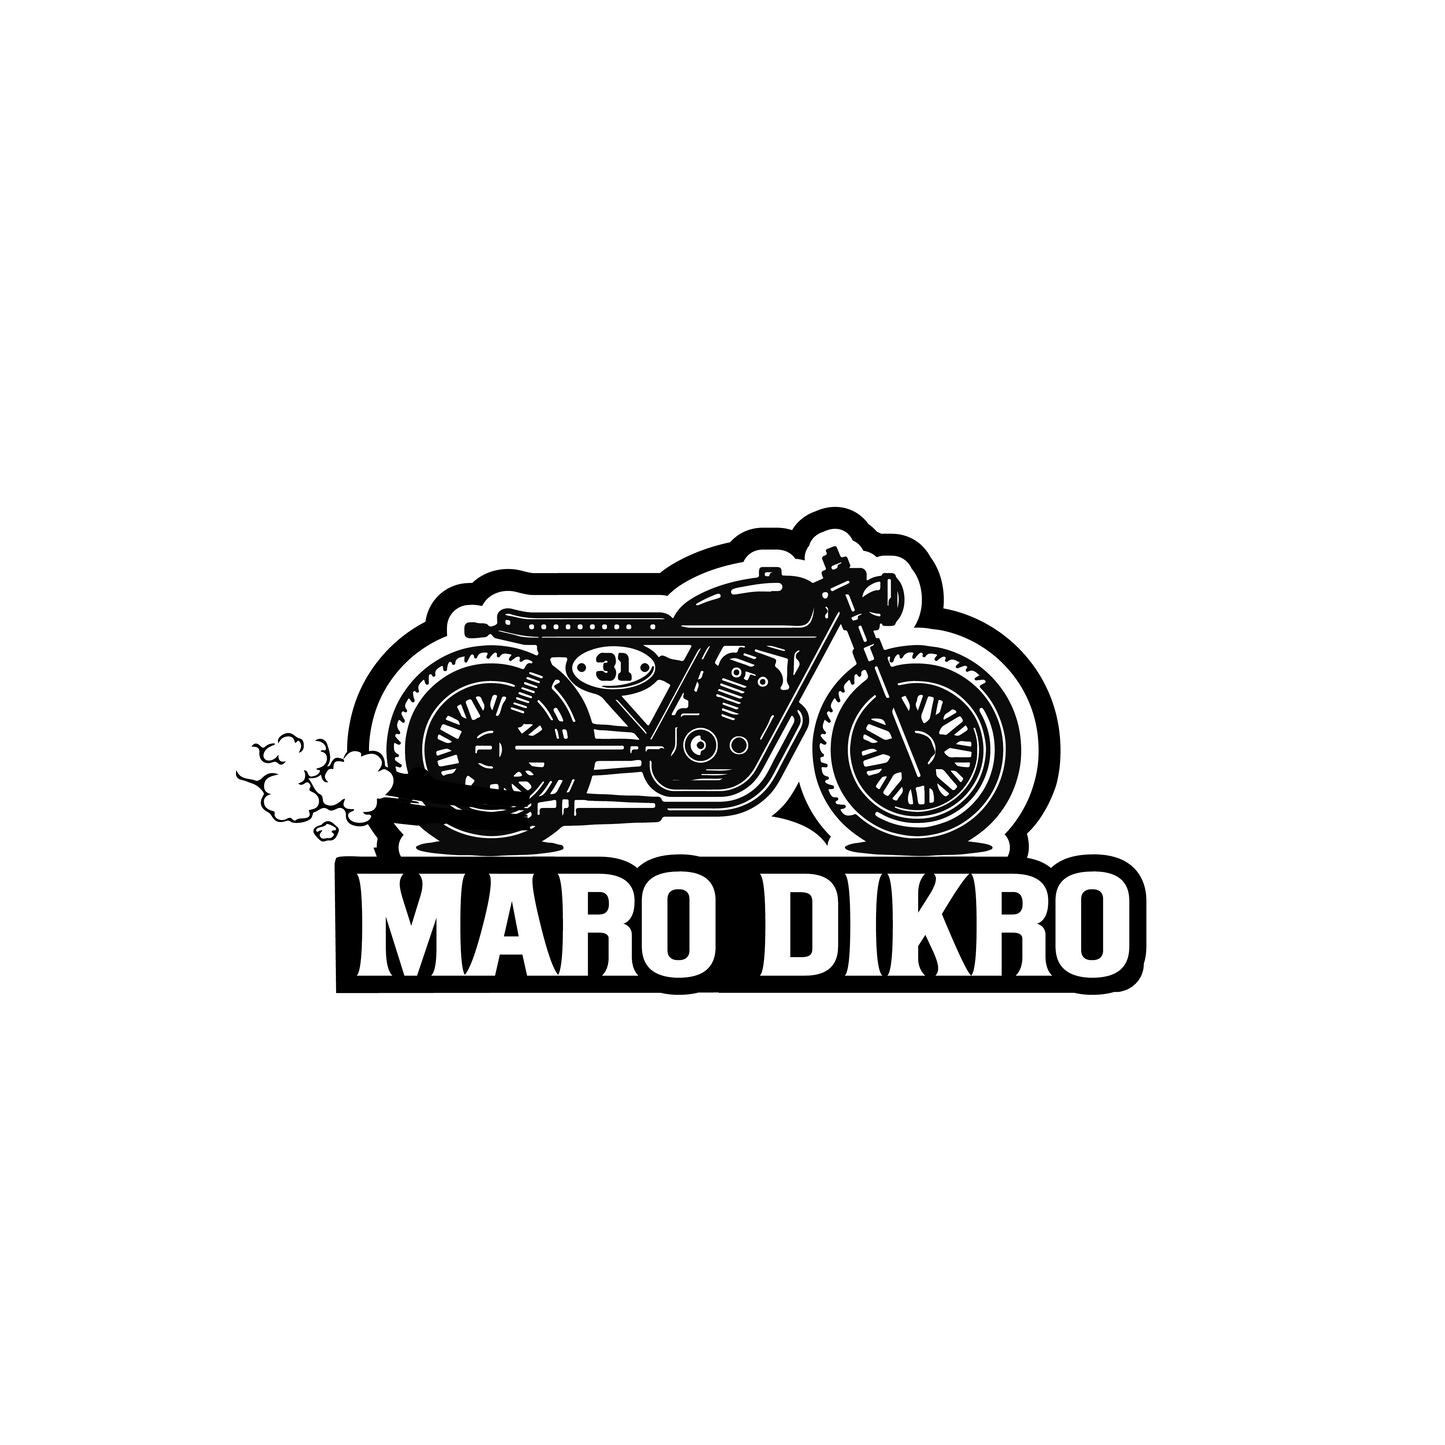 Maaro Dikro